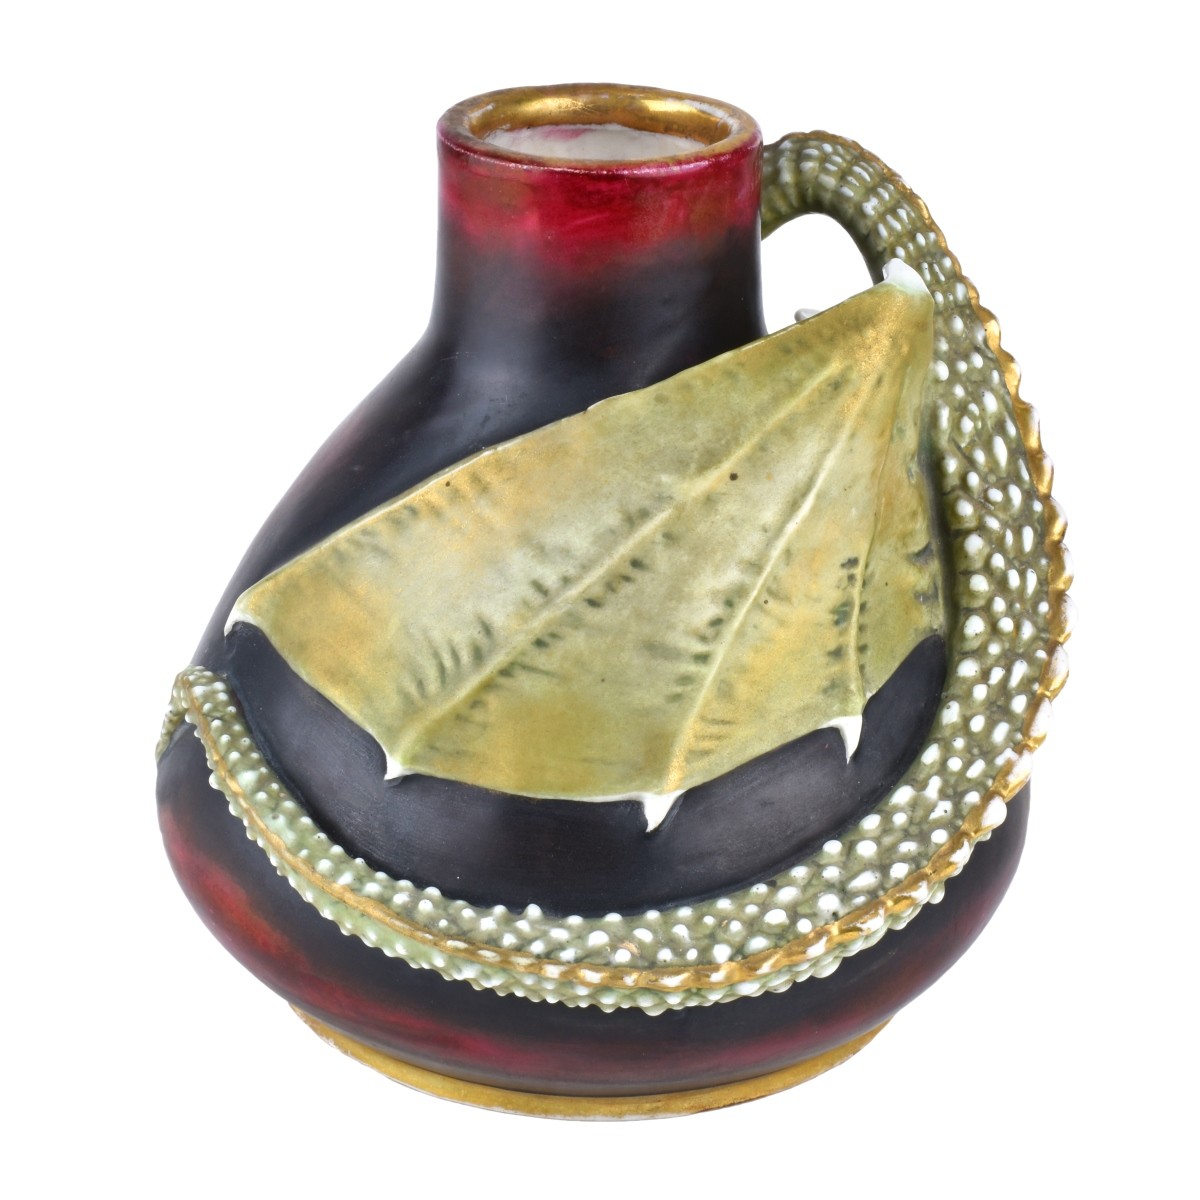 Turn Teplitz Amphora Dragon Vase